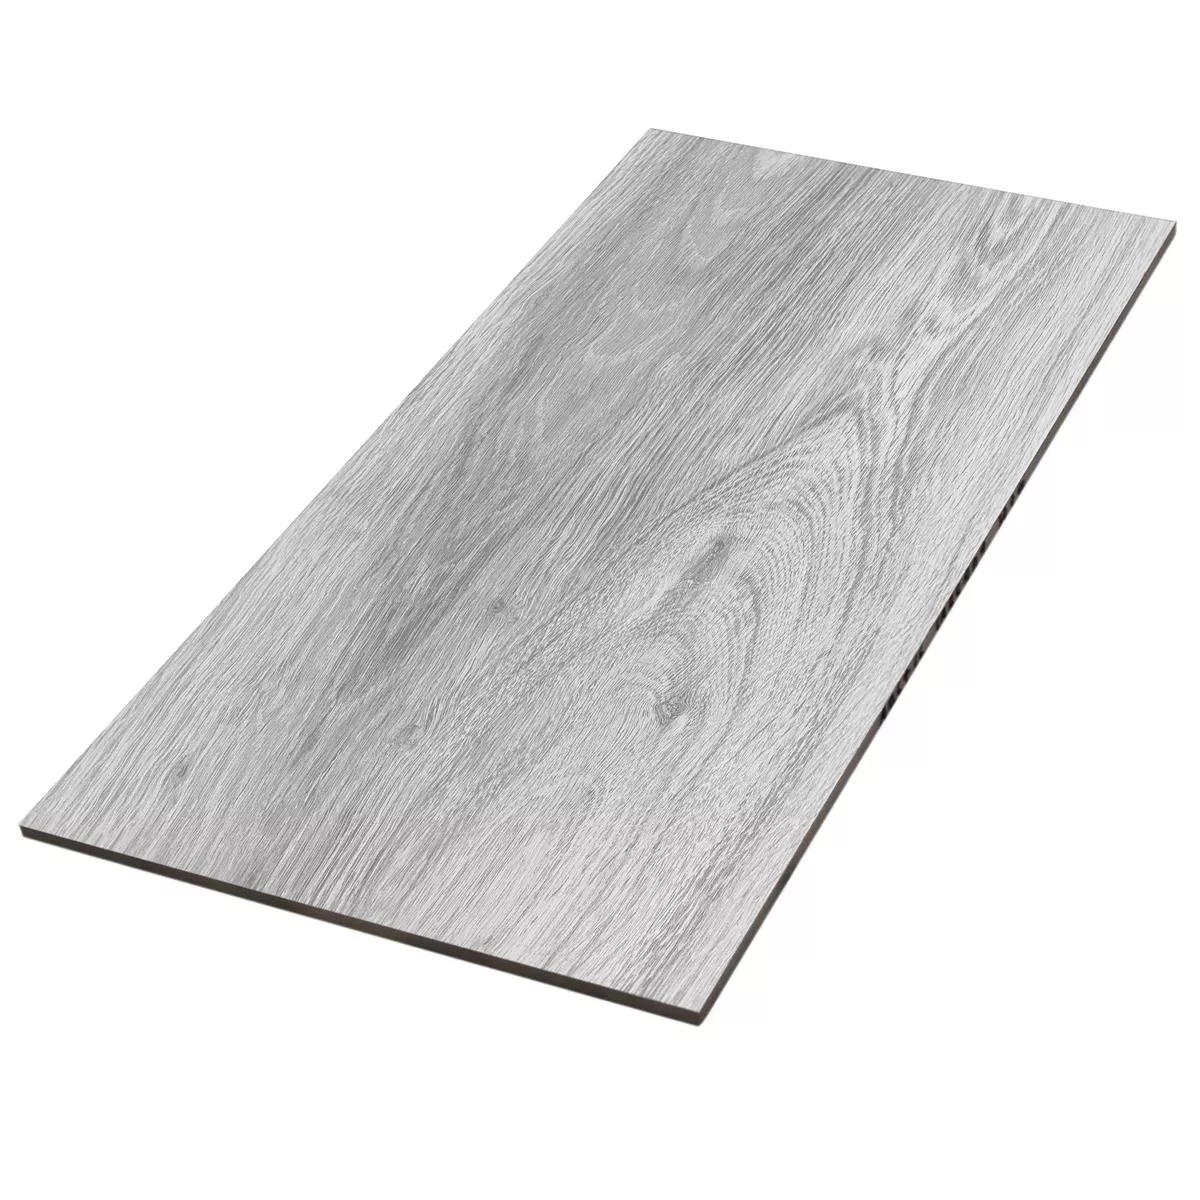 Sample Floor Tiles Goranboy Wood Optic Silver 30x60cm / R10